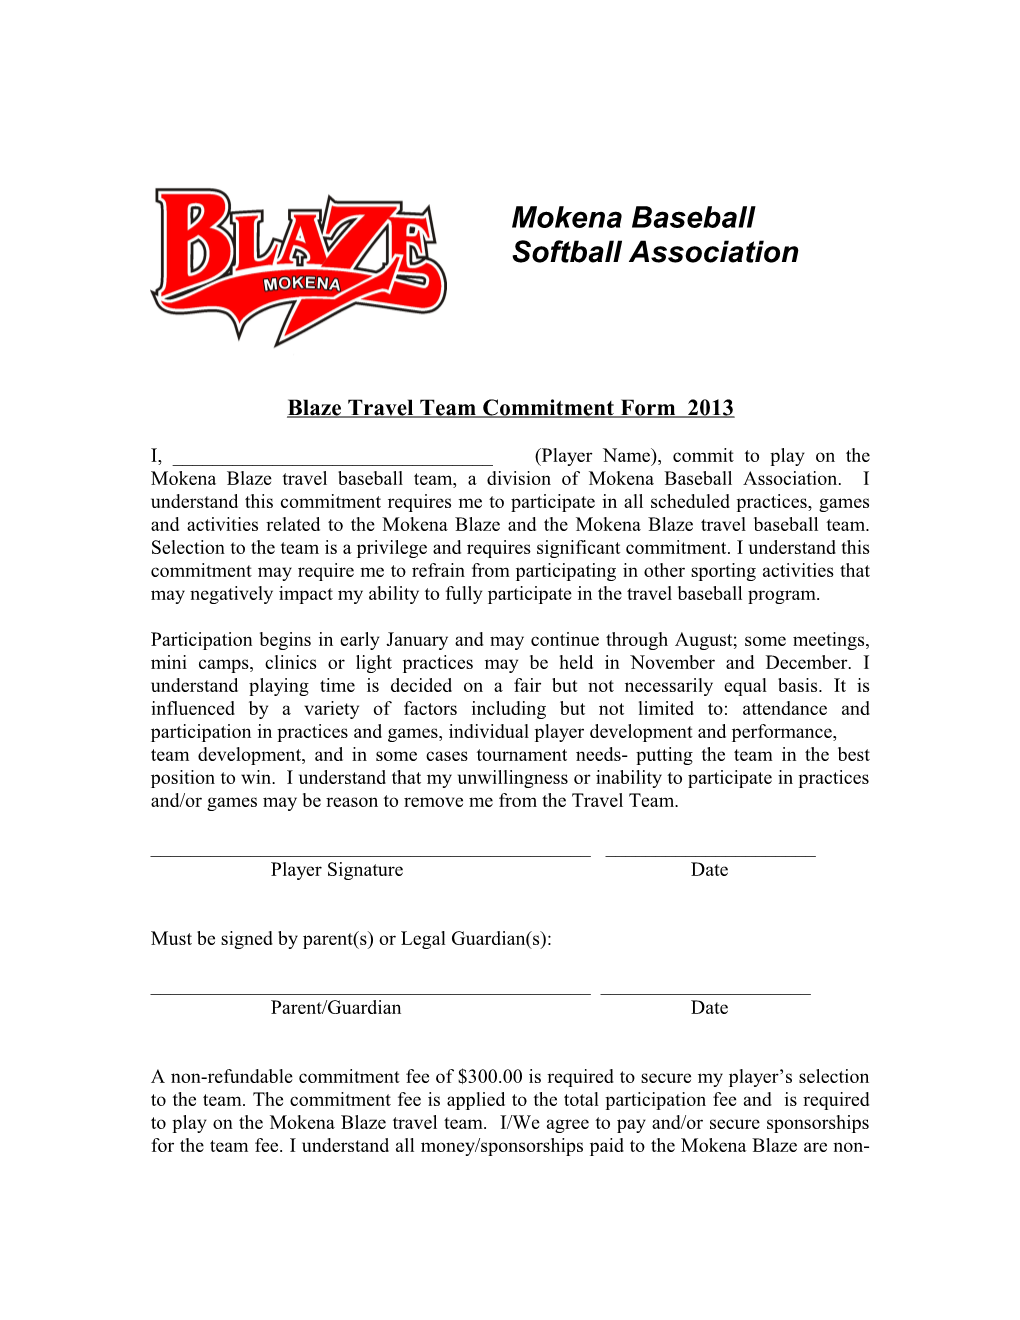 Blaze Travel Team Commitment Form 2013